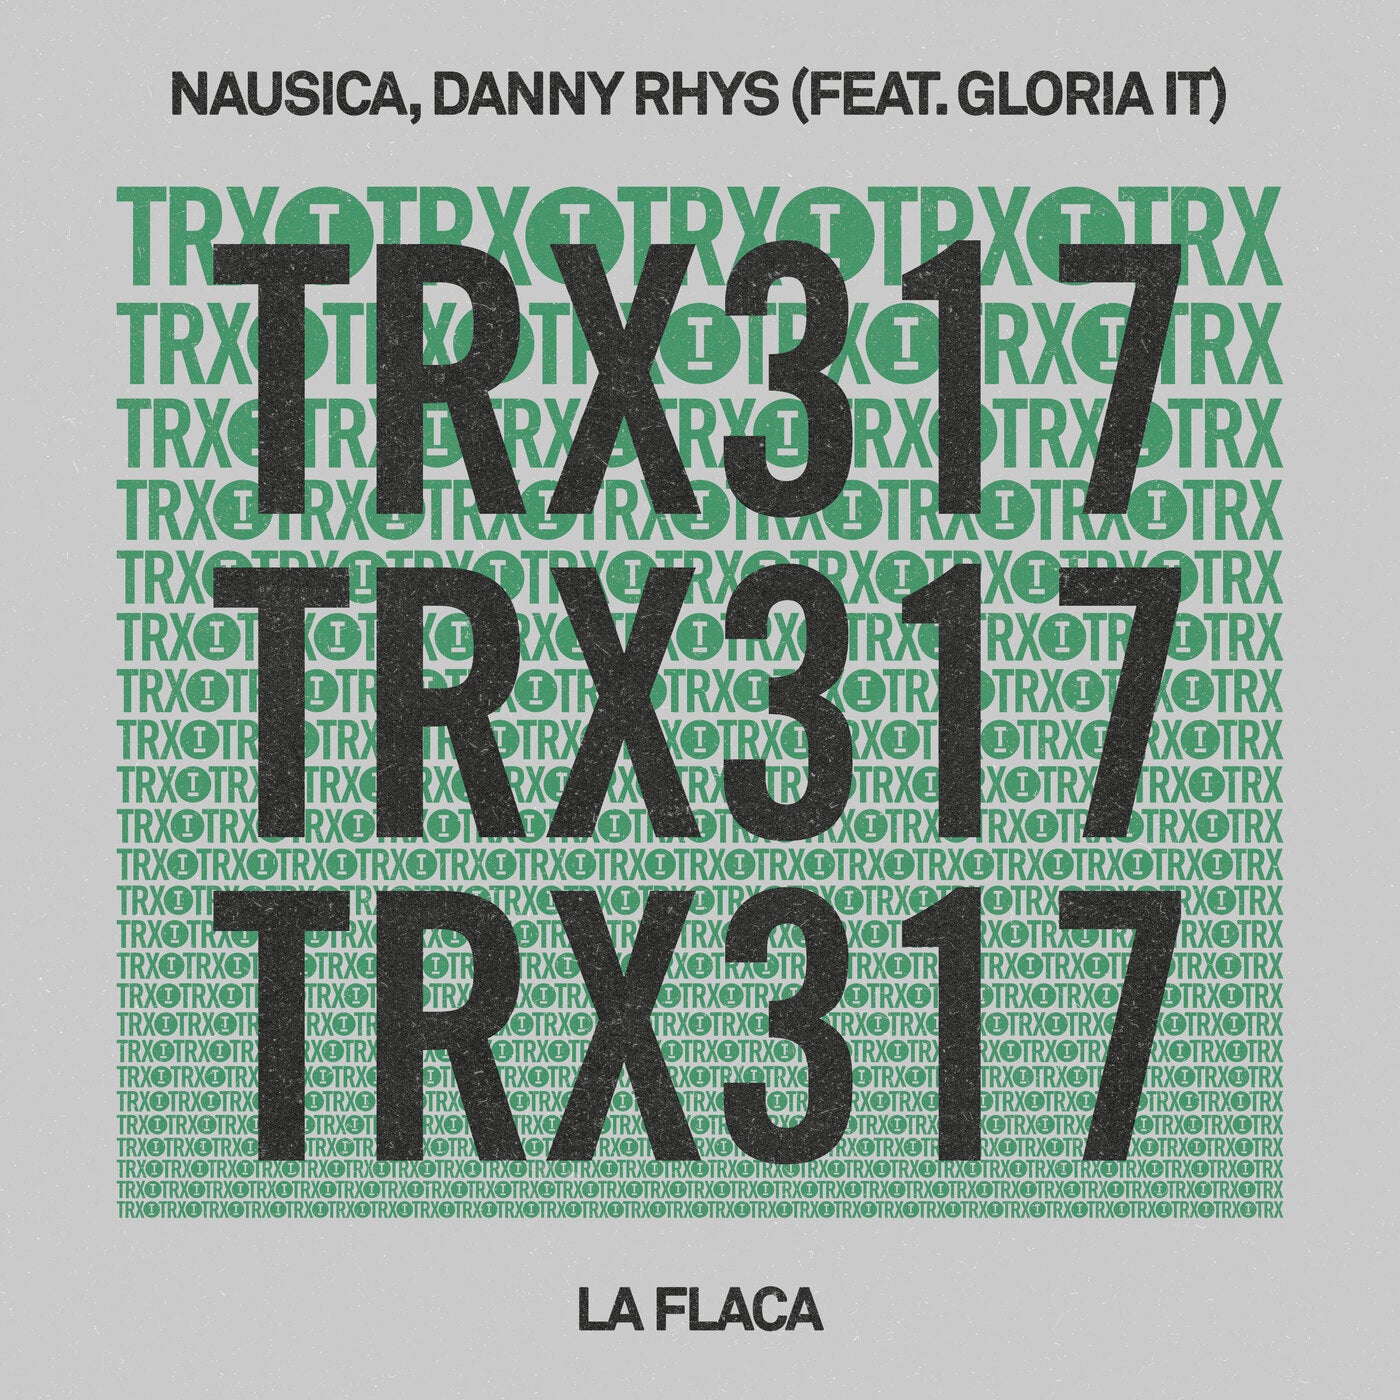 image cover: Nausica, Danny Rhys, Gloria IT - La Flaca on Toolroom Trax